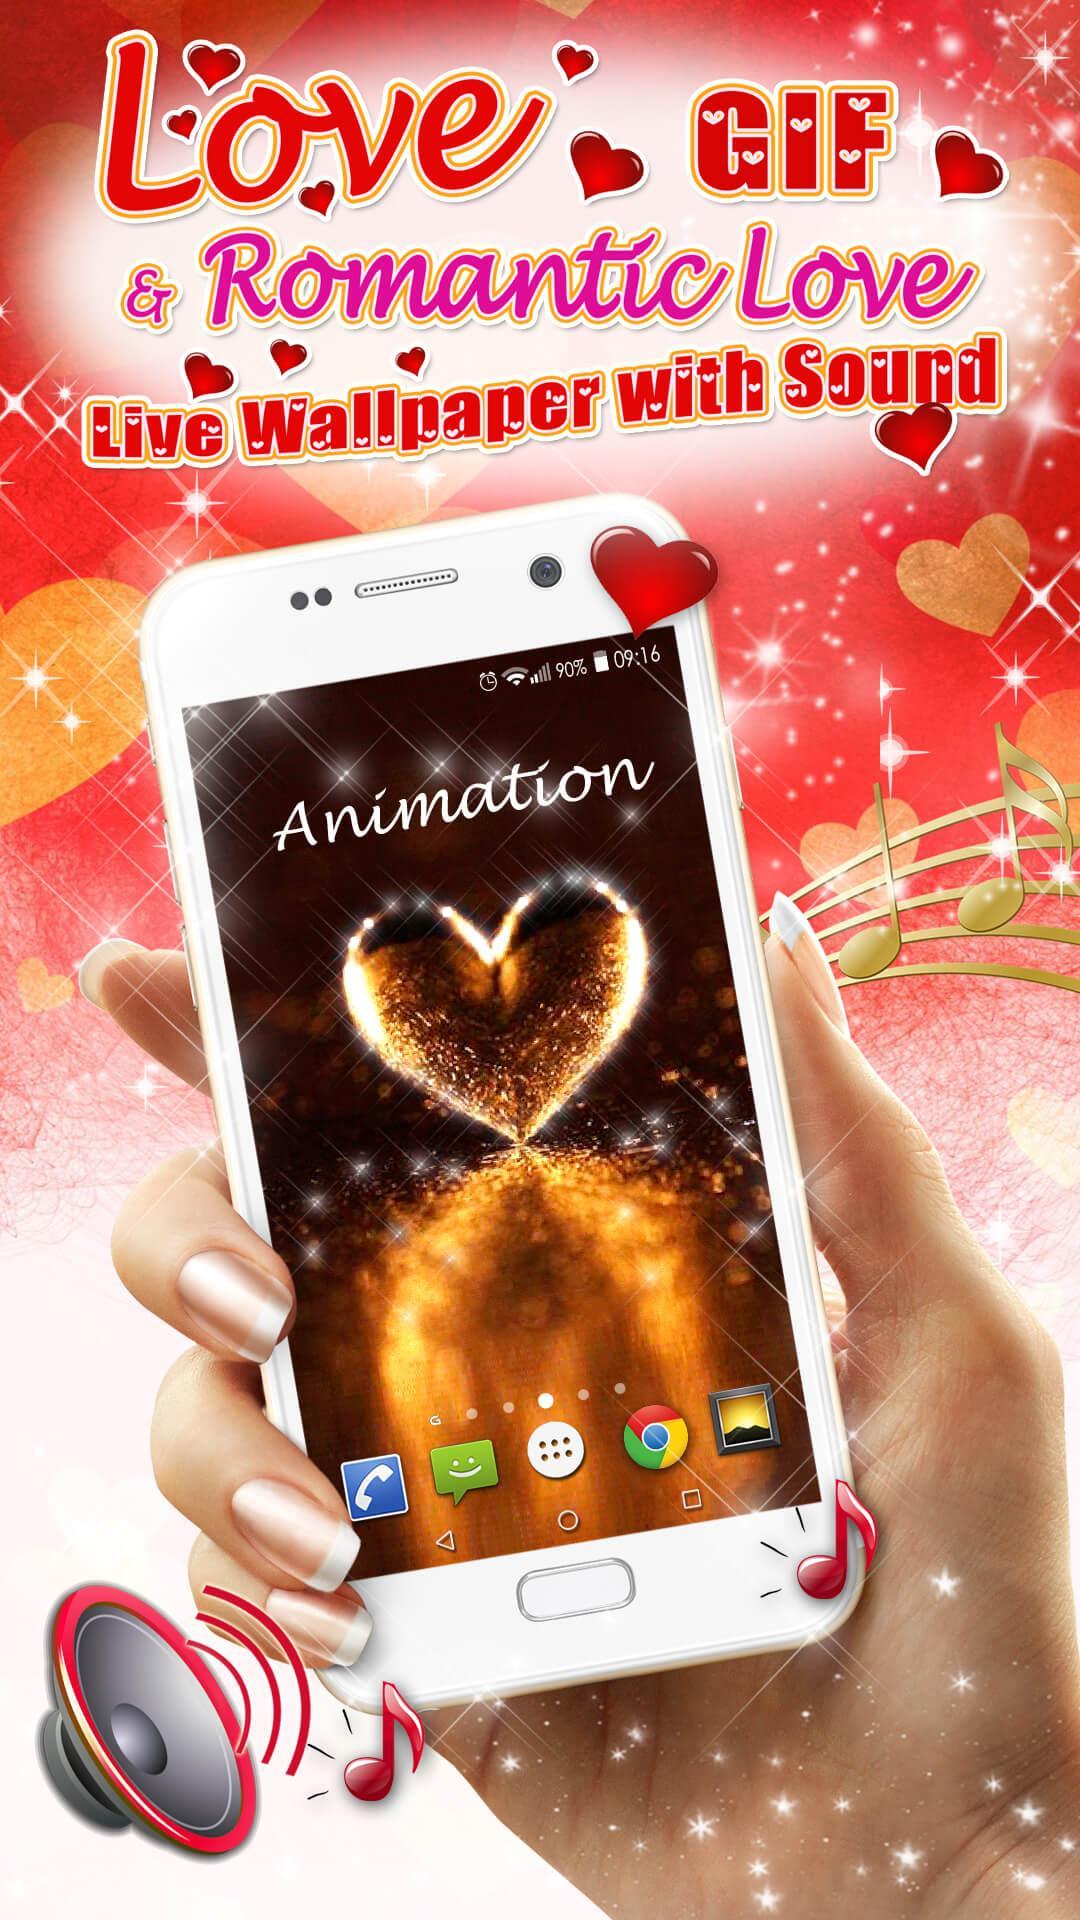 Gif Cinta Xd83dxdc95 Wallpaper Romantis Hidup For Android Apk Download